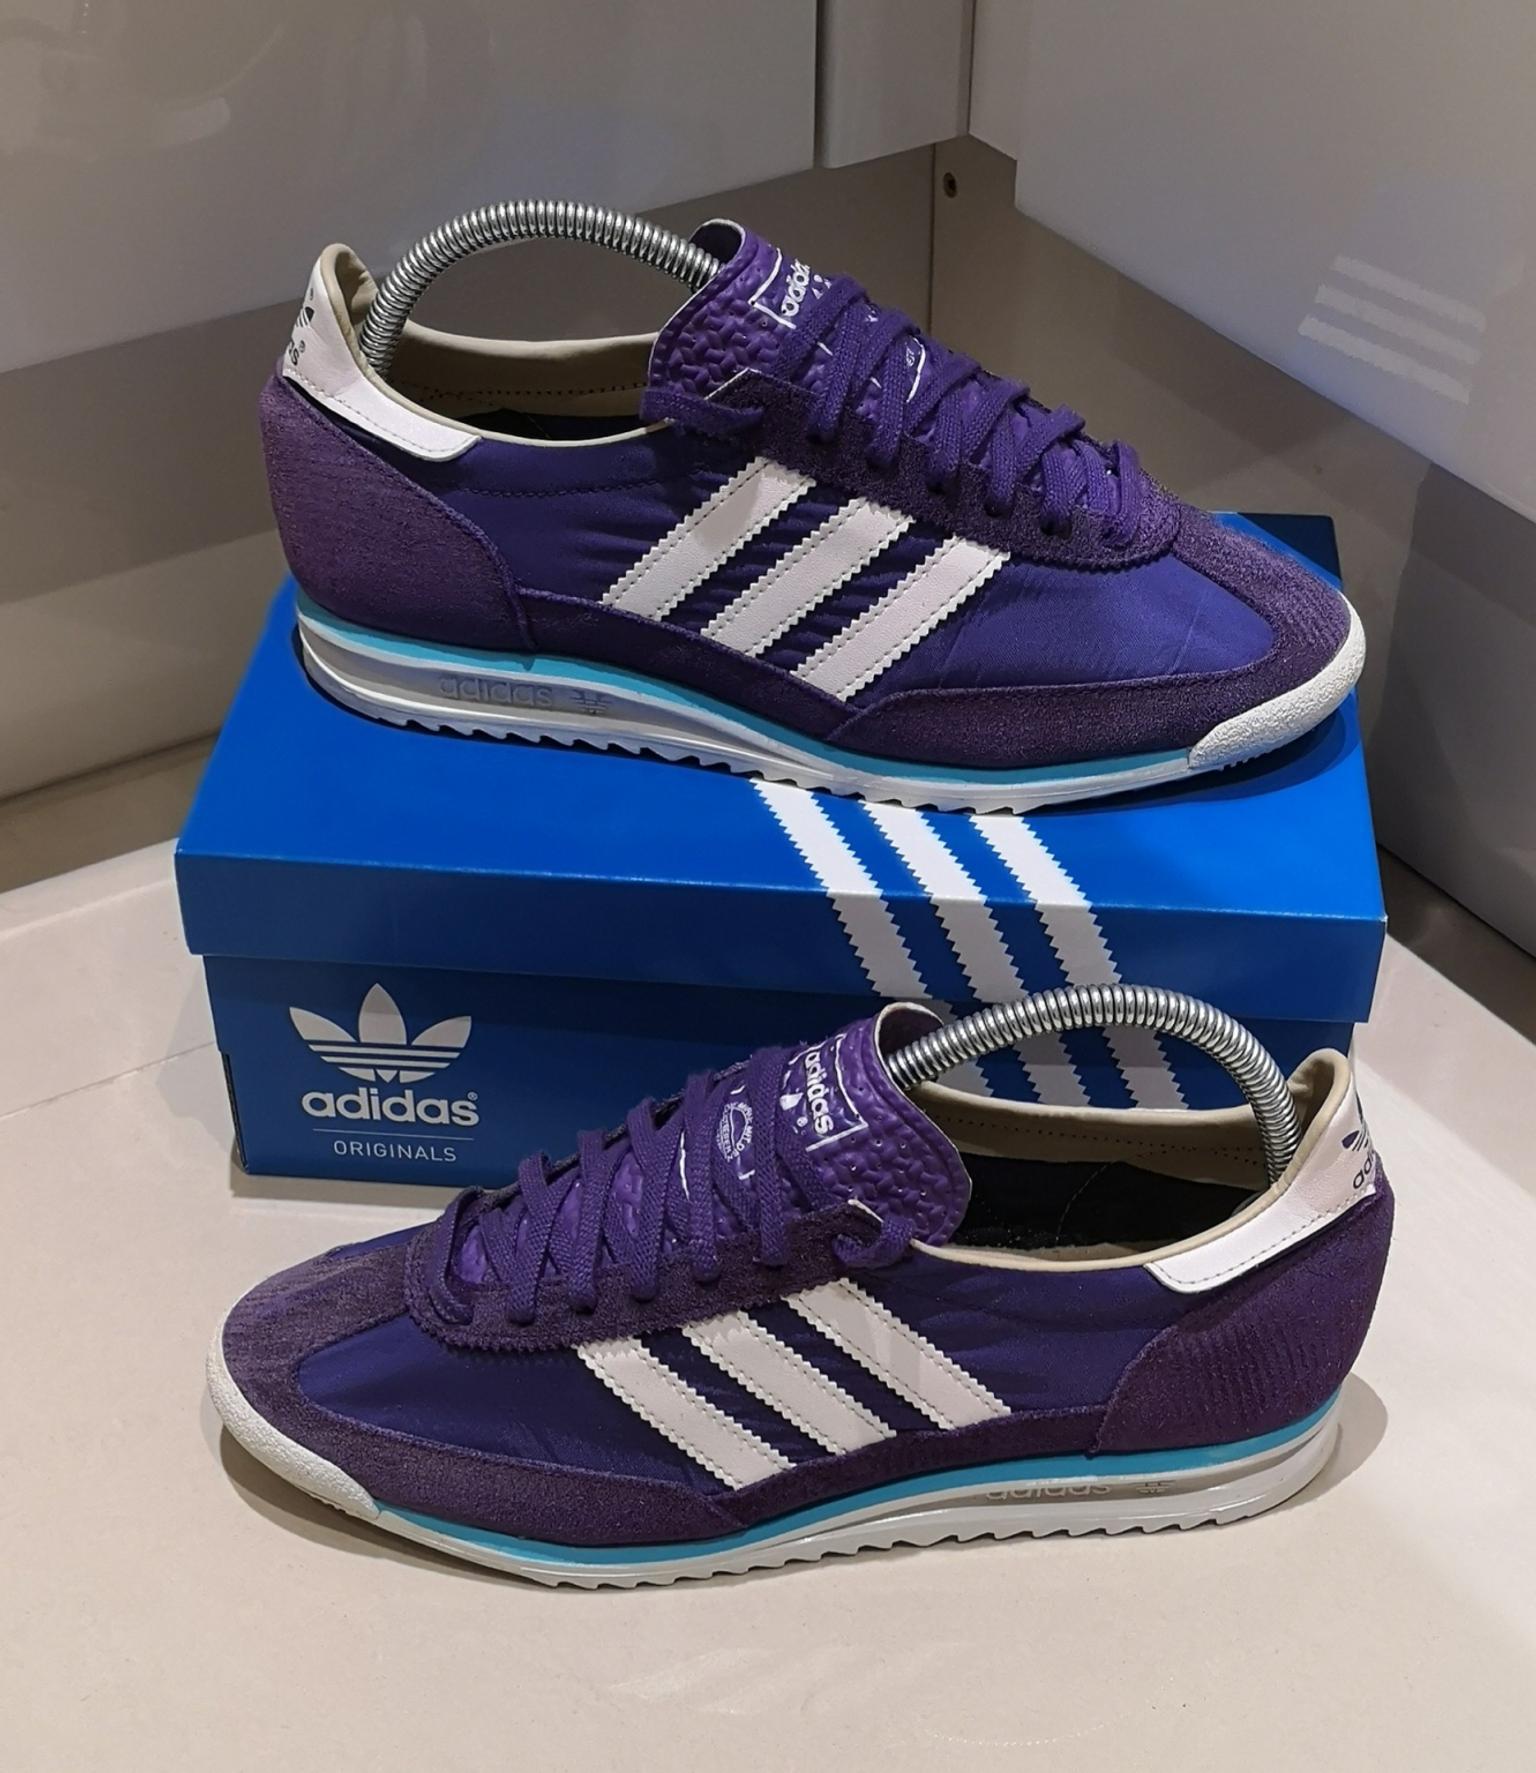 Adidas SL72 Purple UK 7 in DE55 